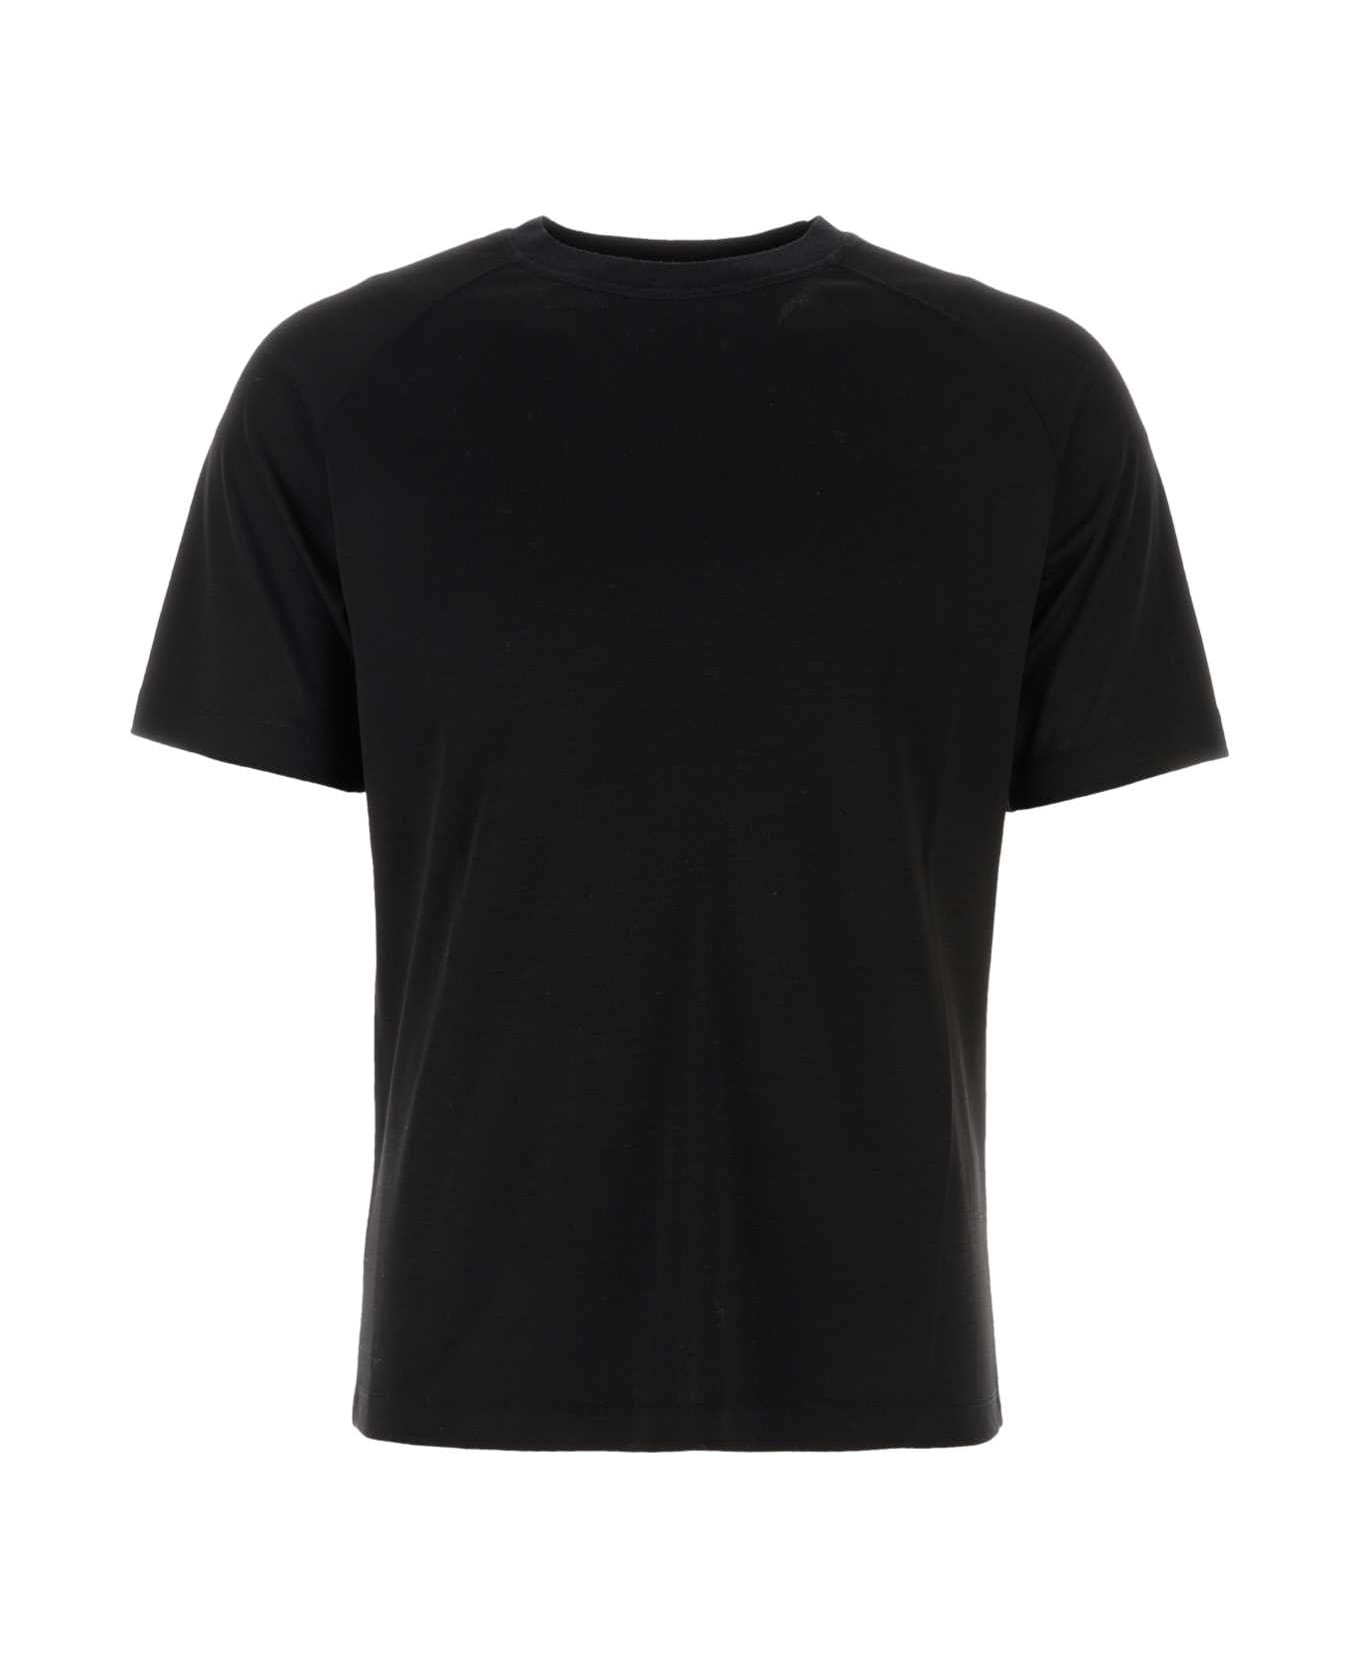 Zegna Black Wool T-shirt - K09 シャツ